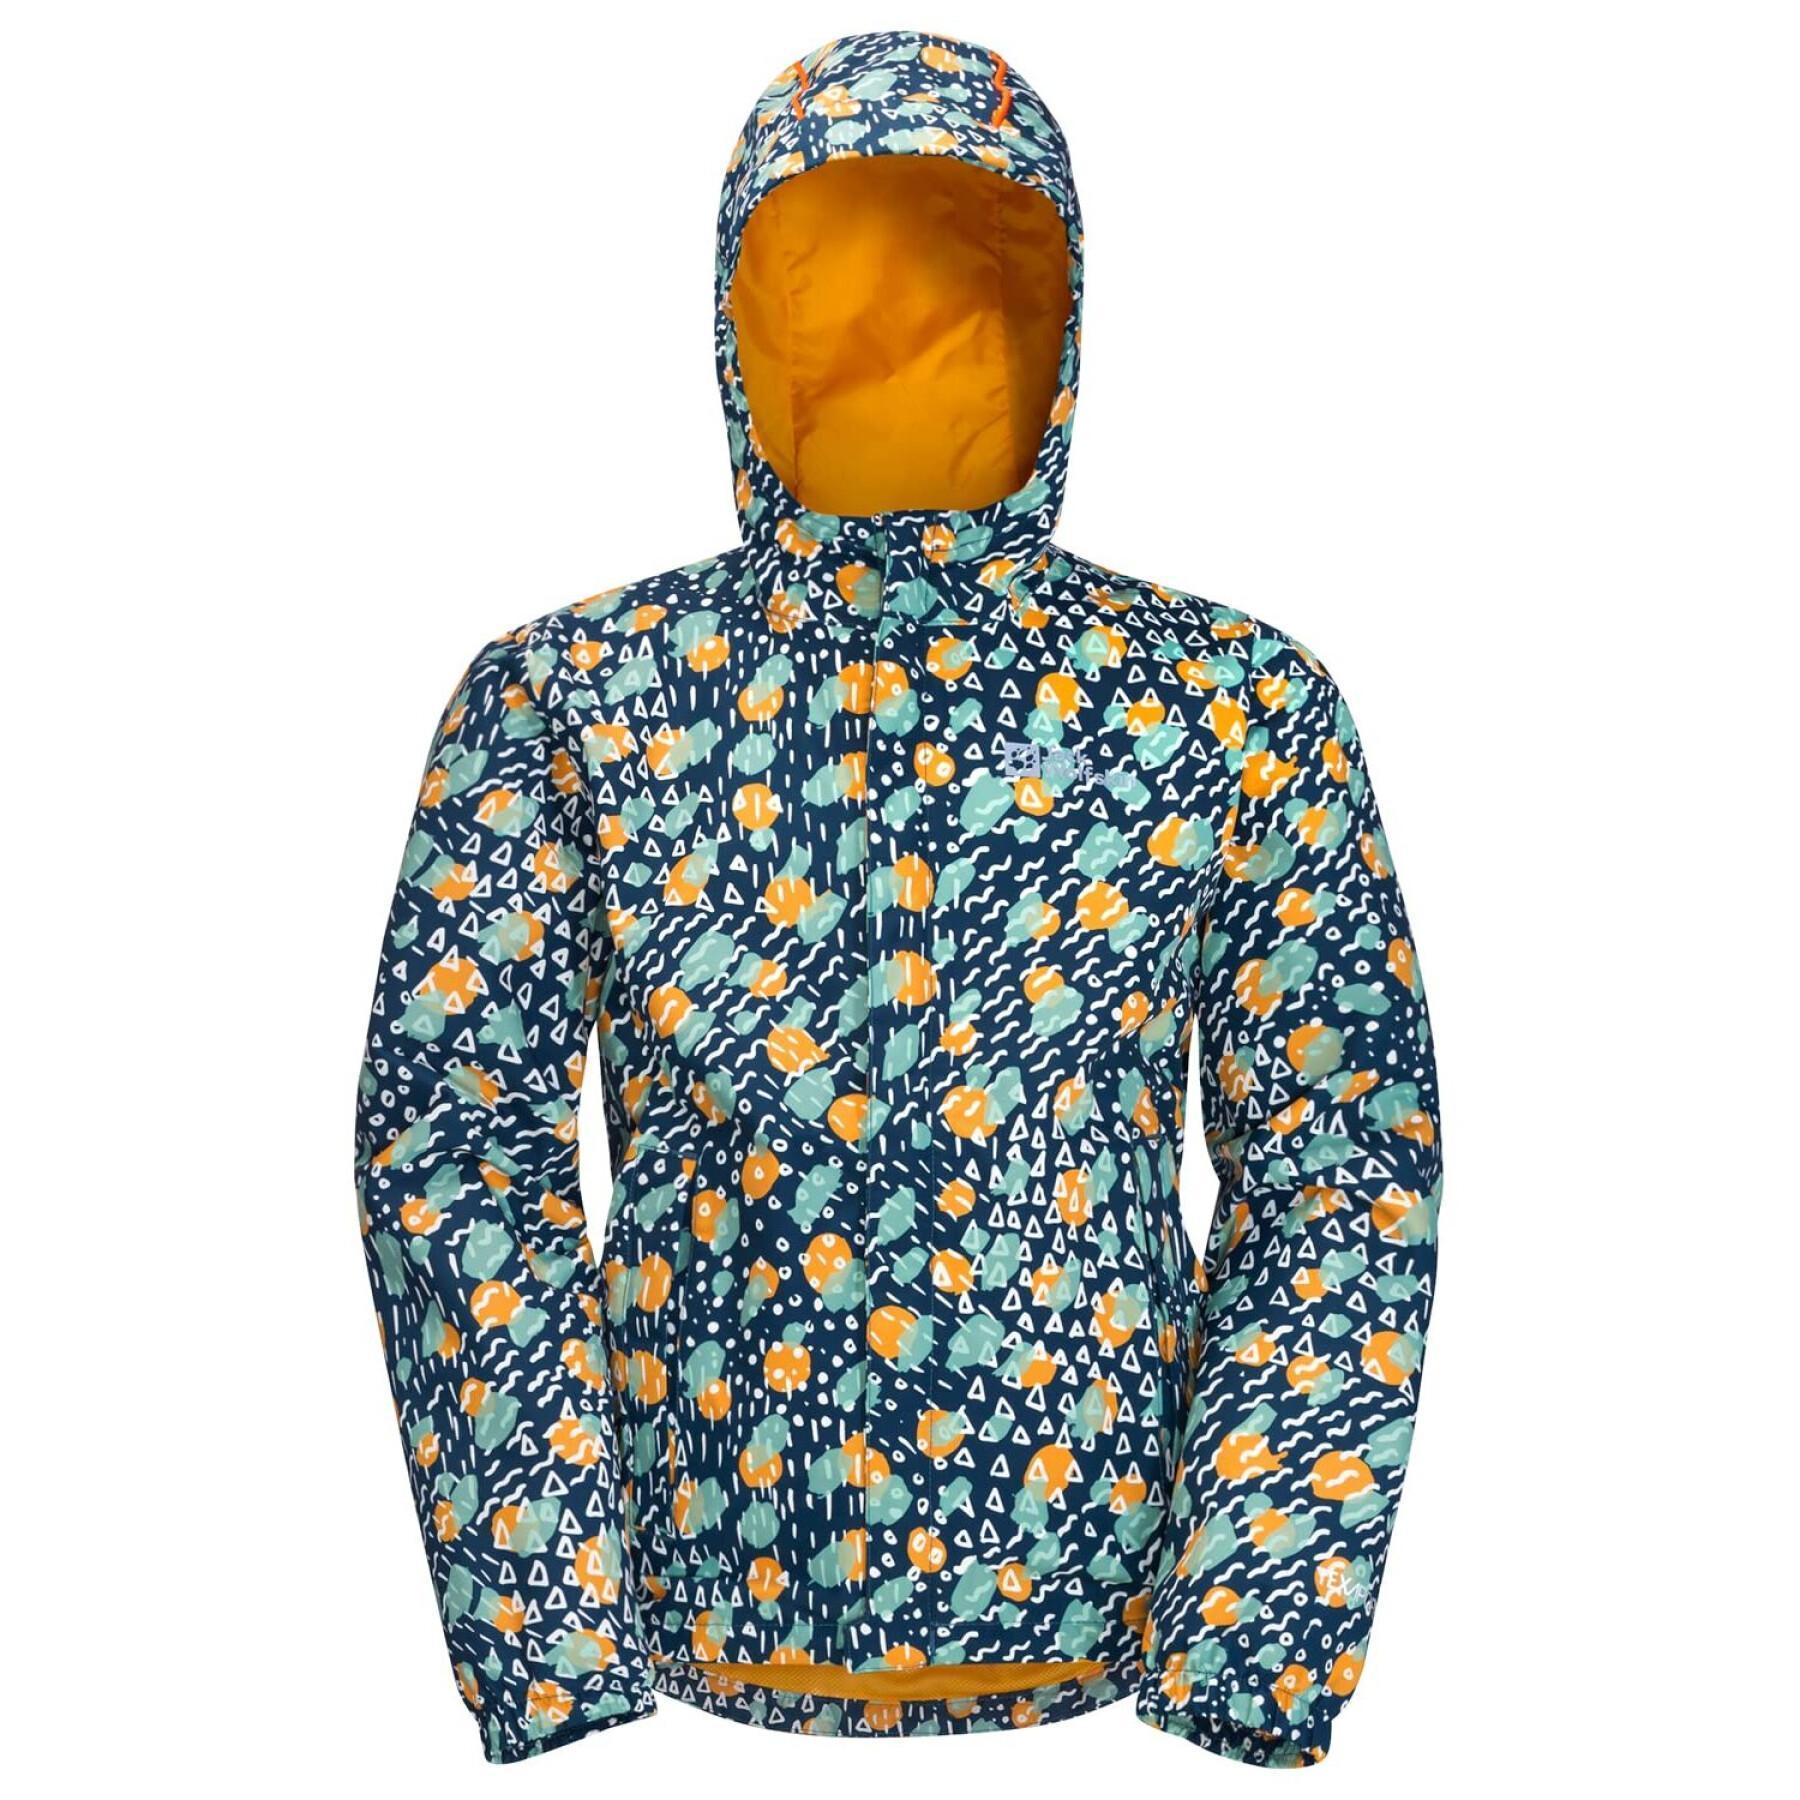 Waterproof jacket with baby print Jack Wolfskin Villi 2l